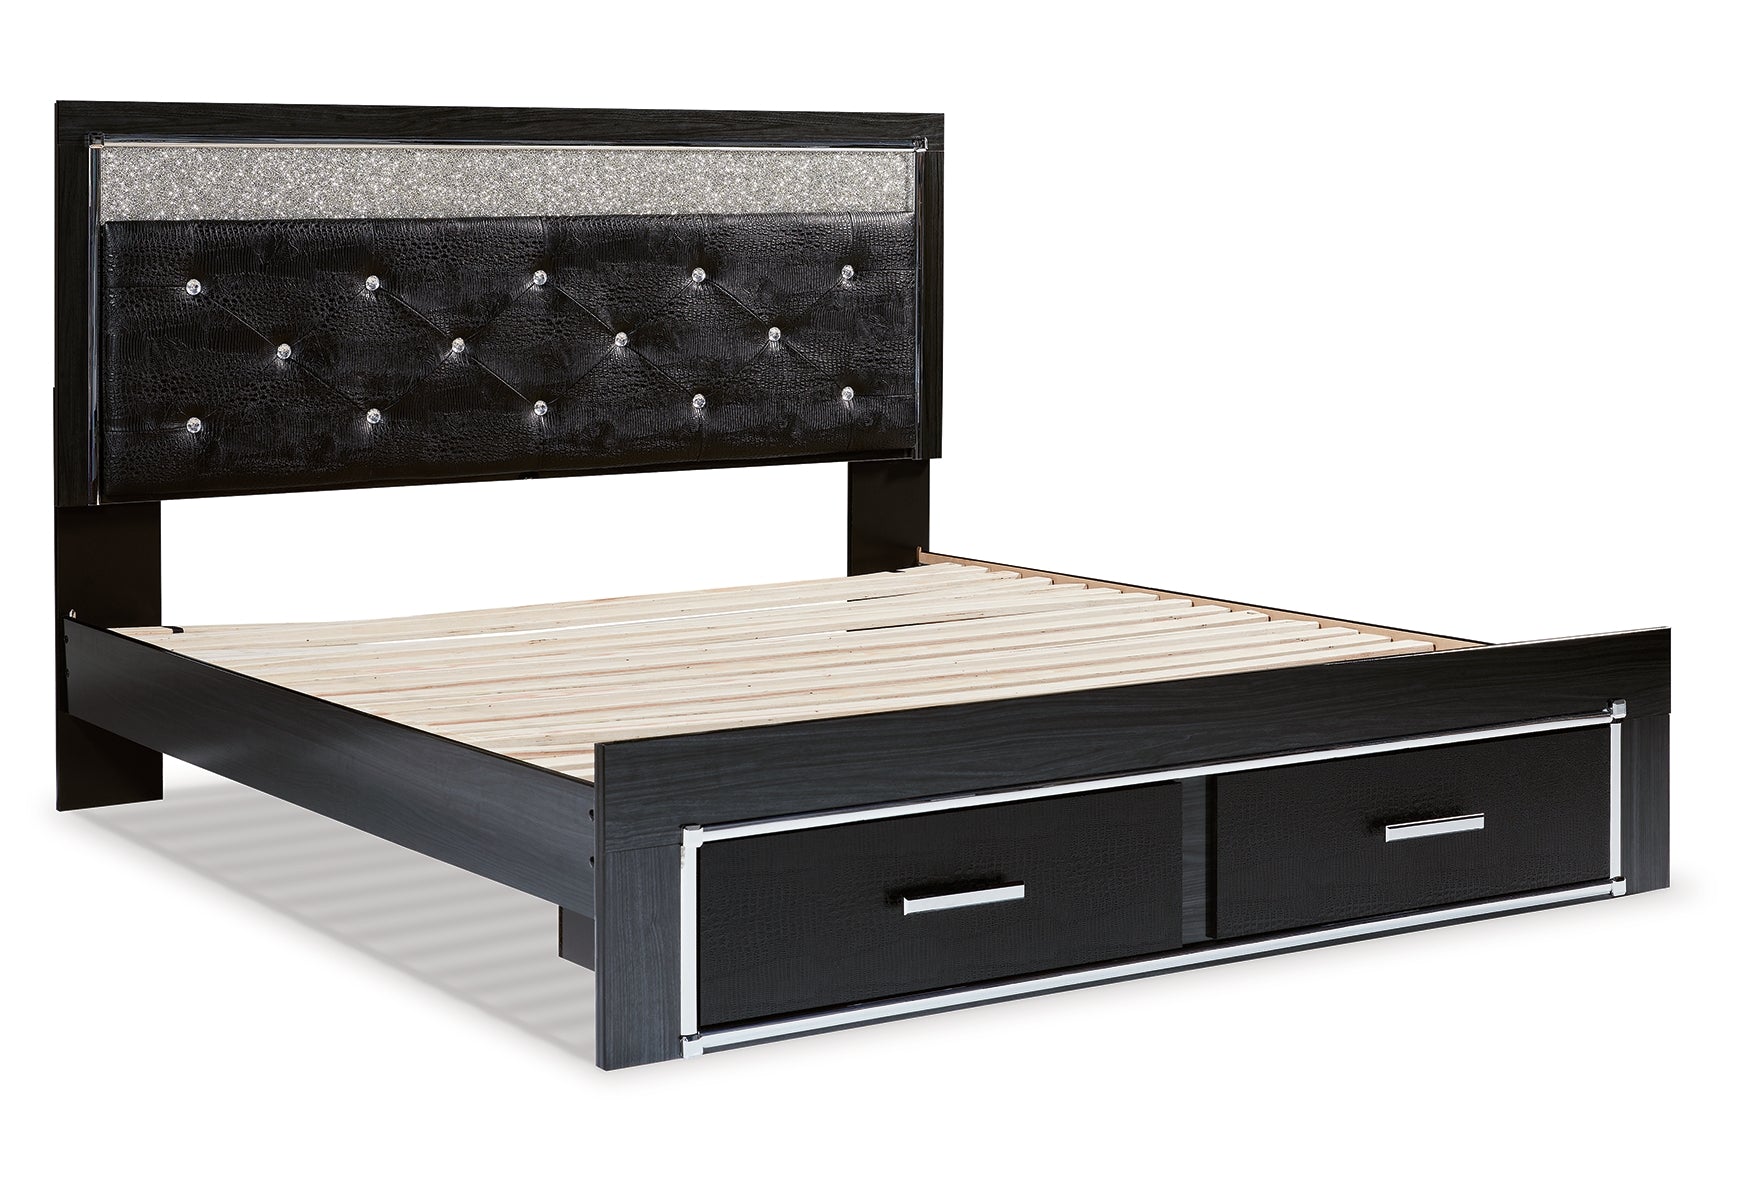 Kaydell King Upholstered Panel Storage Platform Bed with Mirrored Dresser